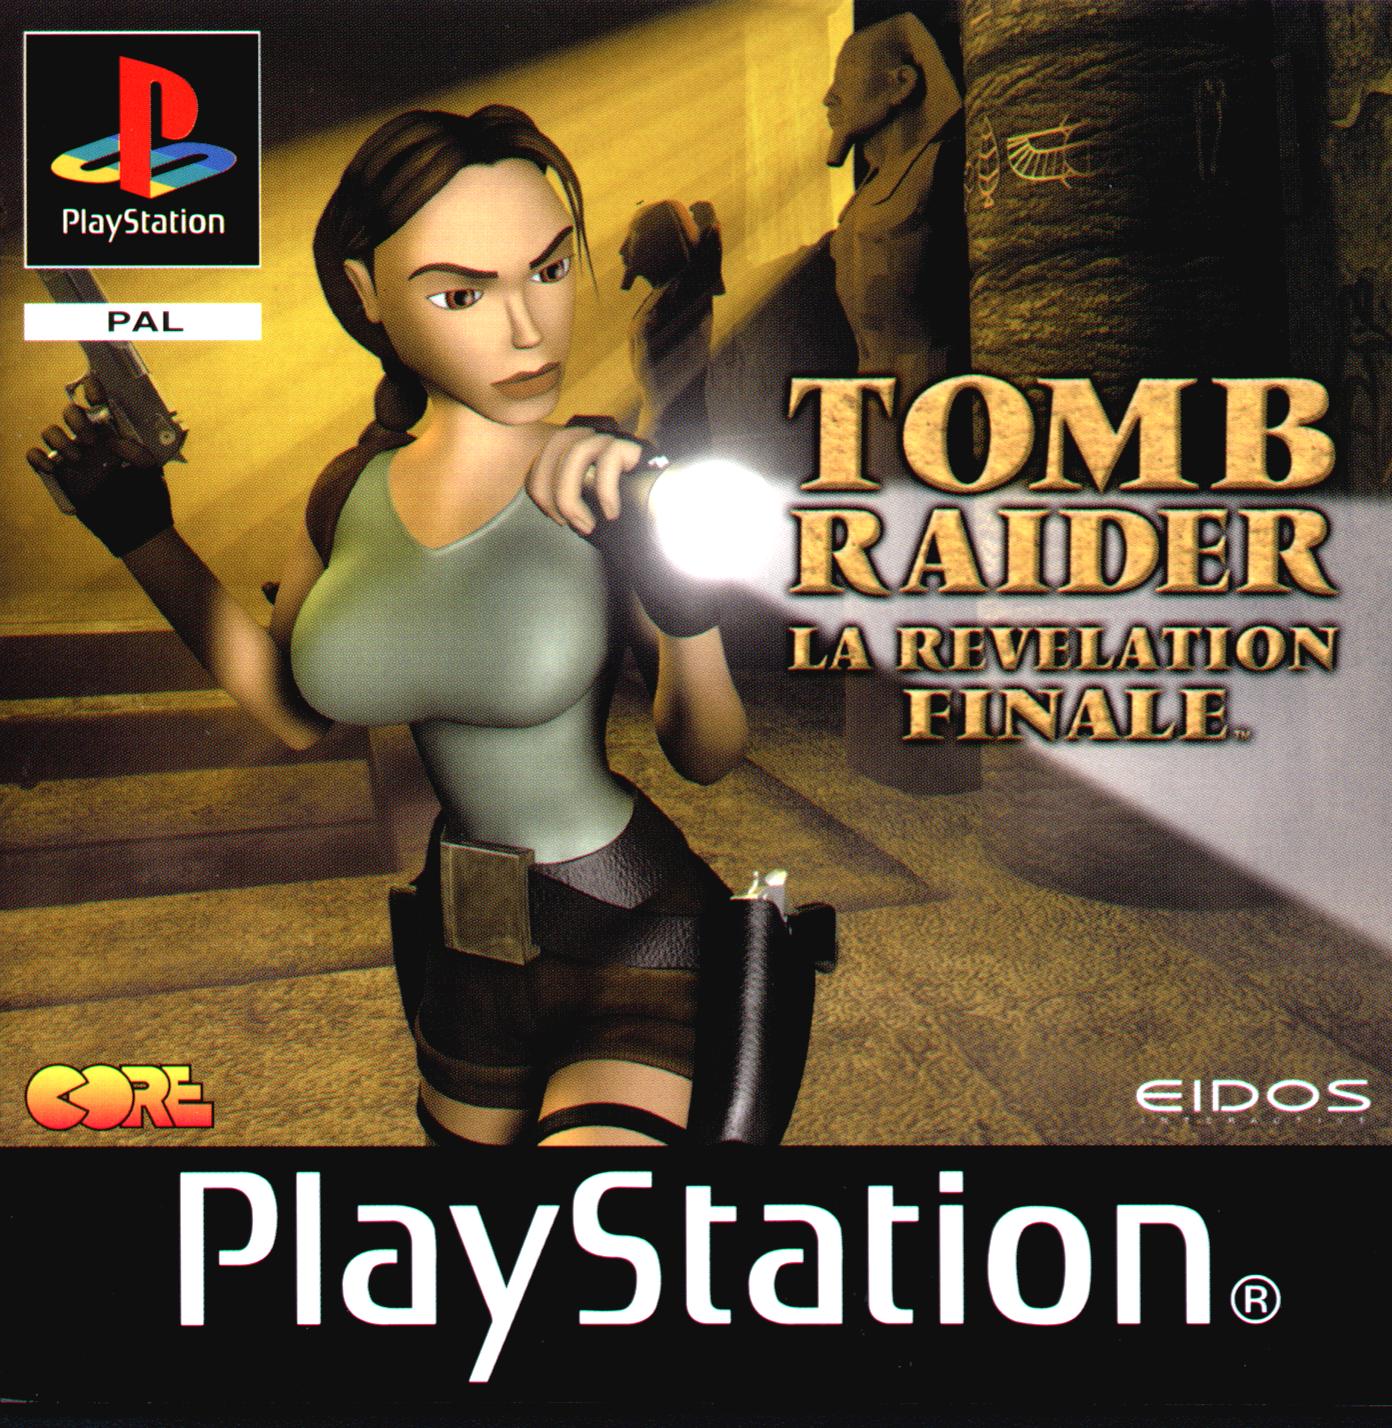 Download free tomb raider games